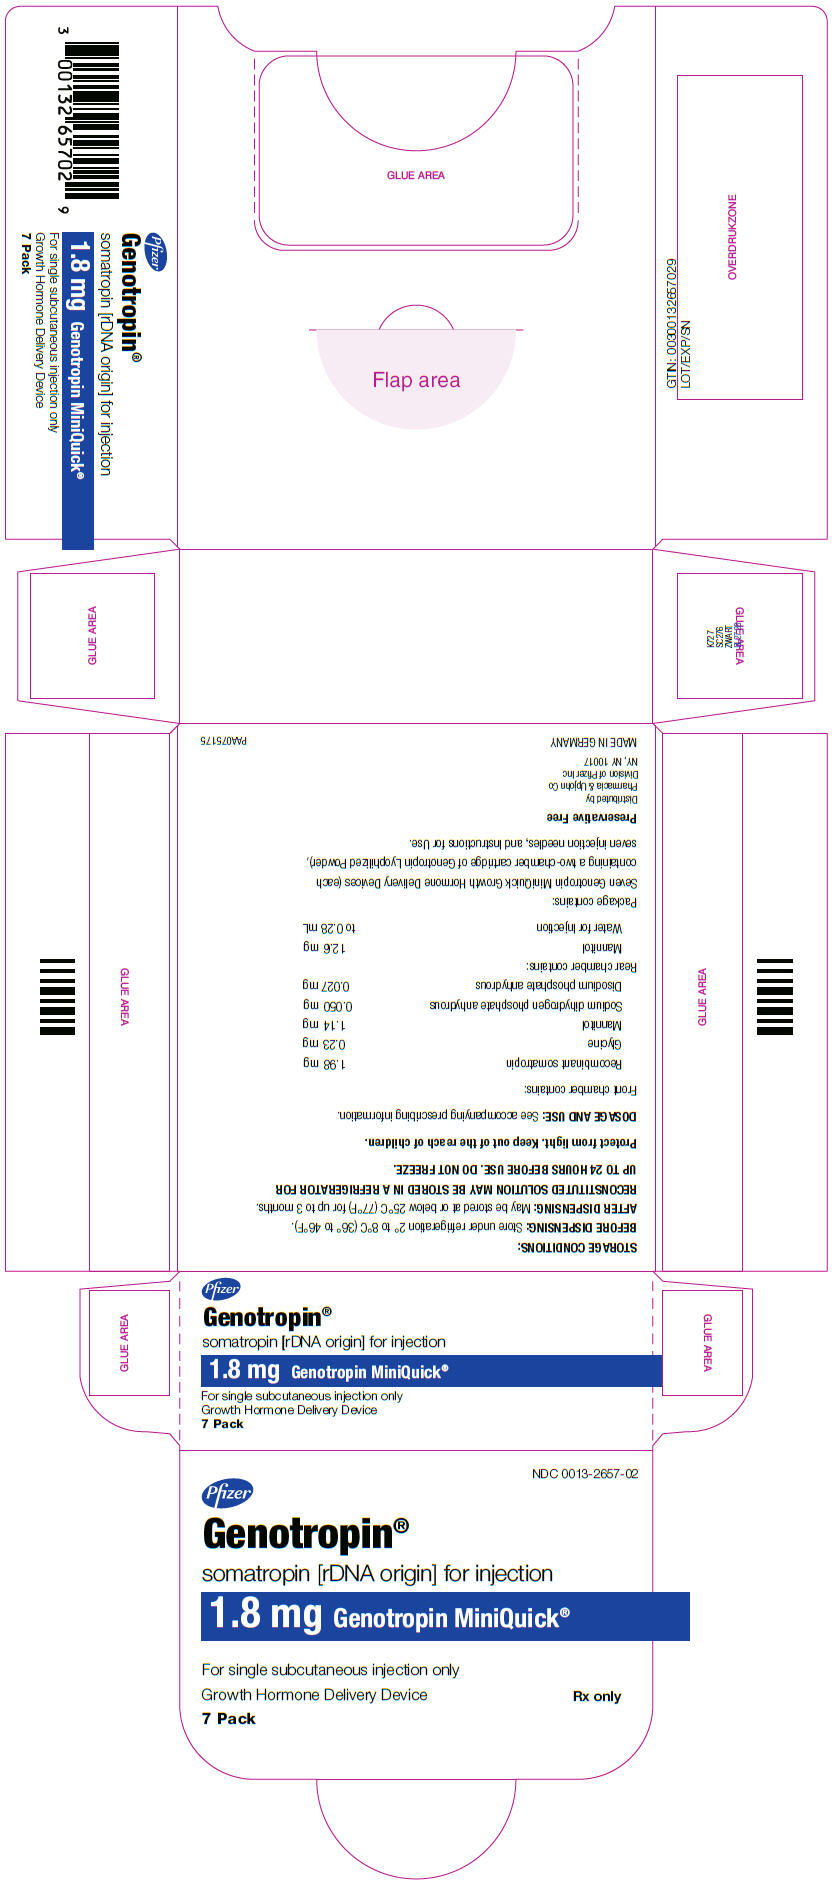 Principal Display Panel - 0.4 mg Cartridge Label